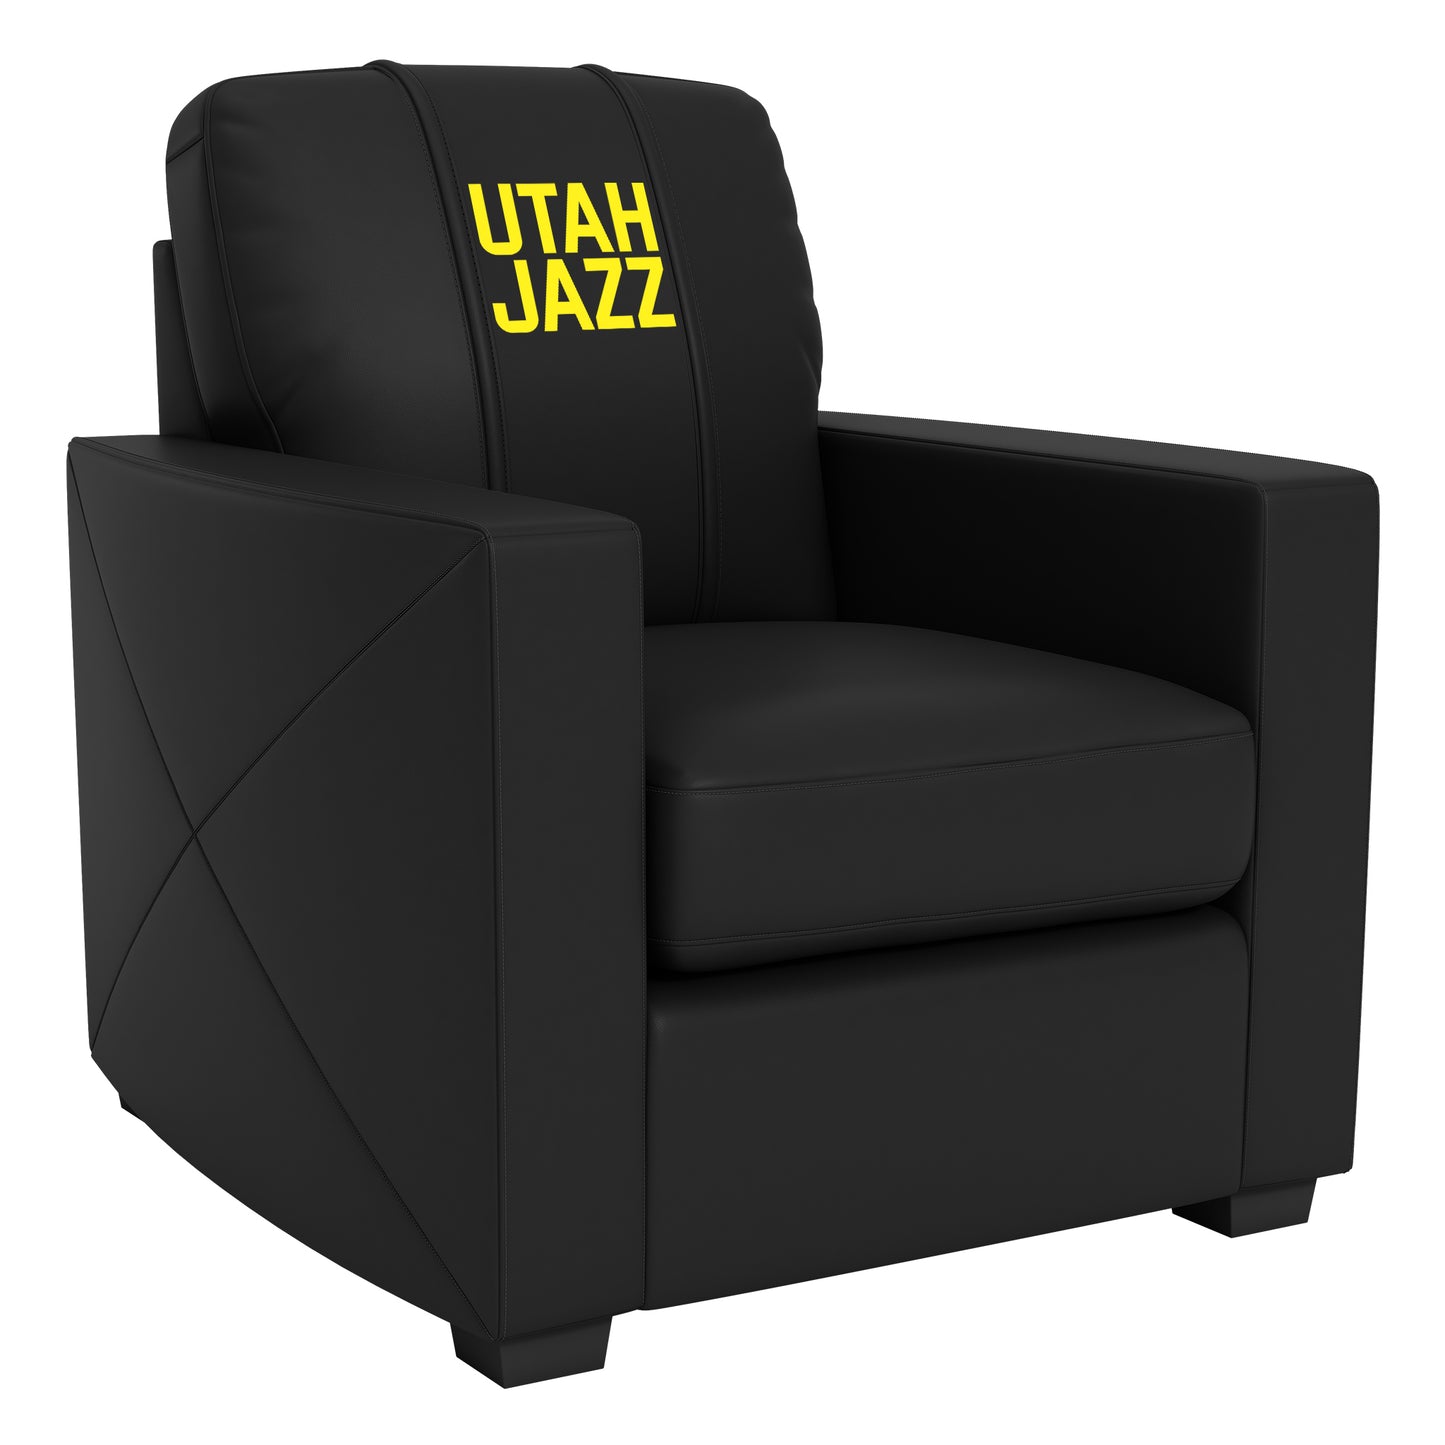 Silver Club Chair with Utah Jazz Wordmark Logo